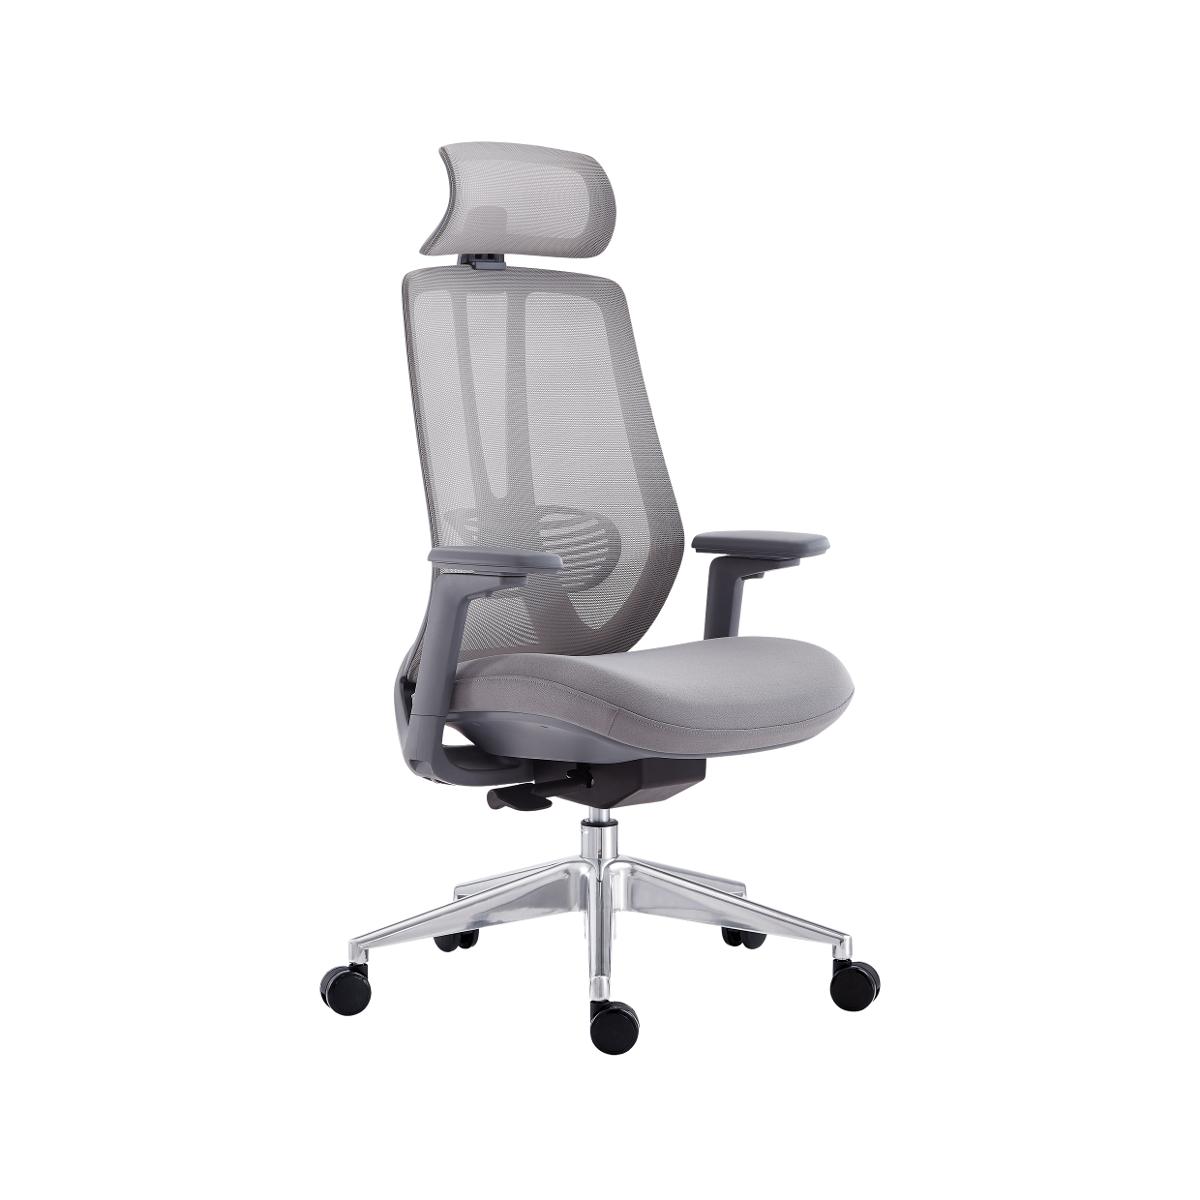 Super Chair เก้าอี้ผู้บริหาร รุ่น 7102-3 H Grey